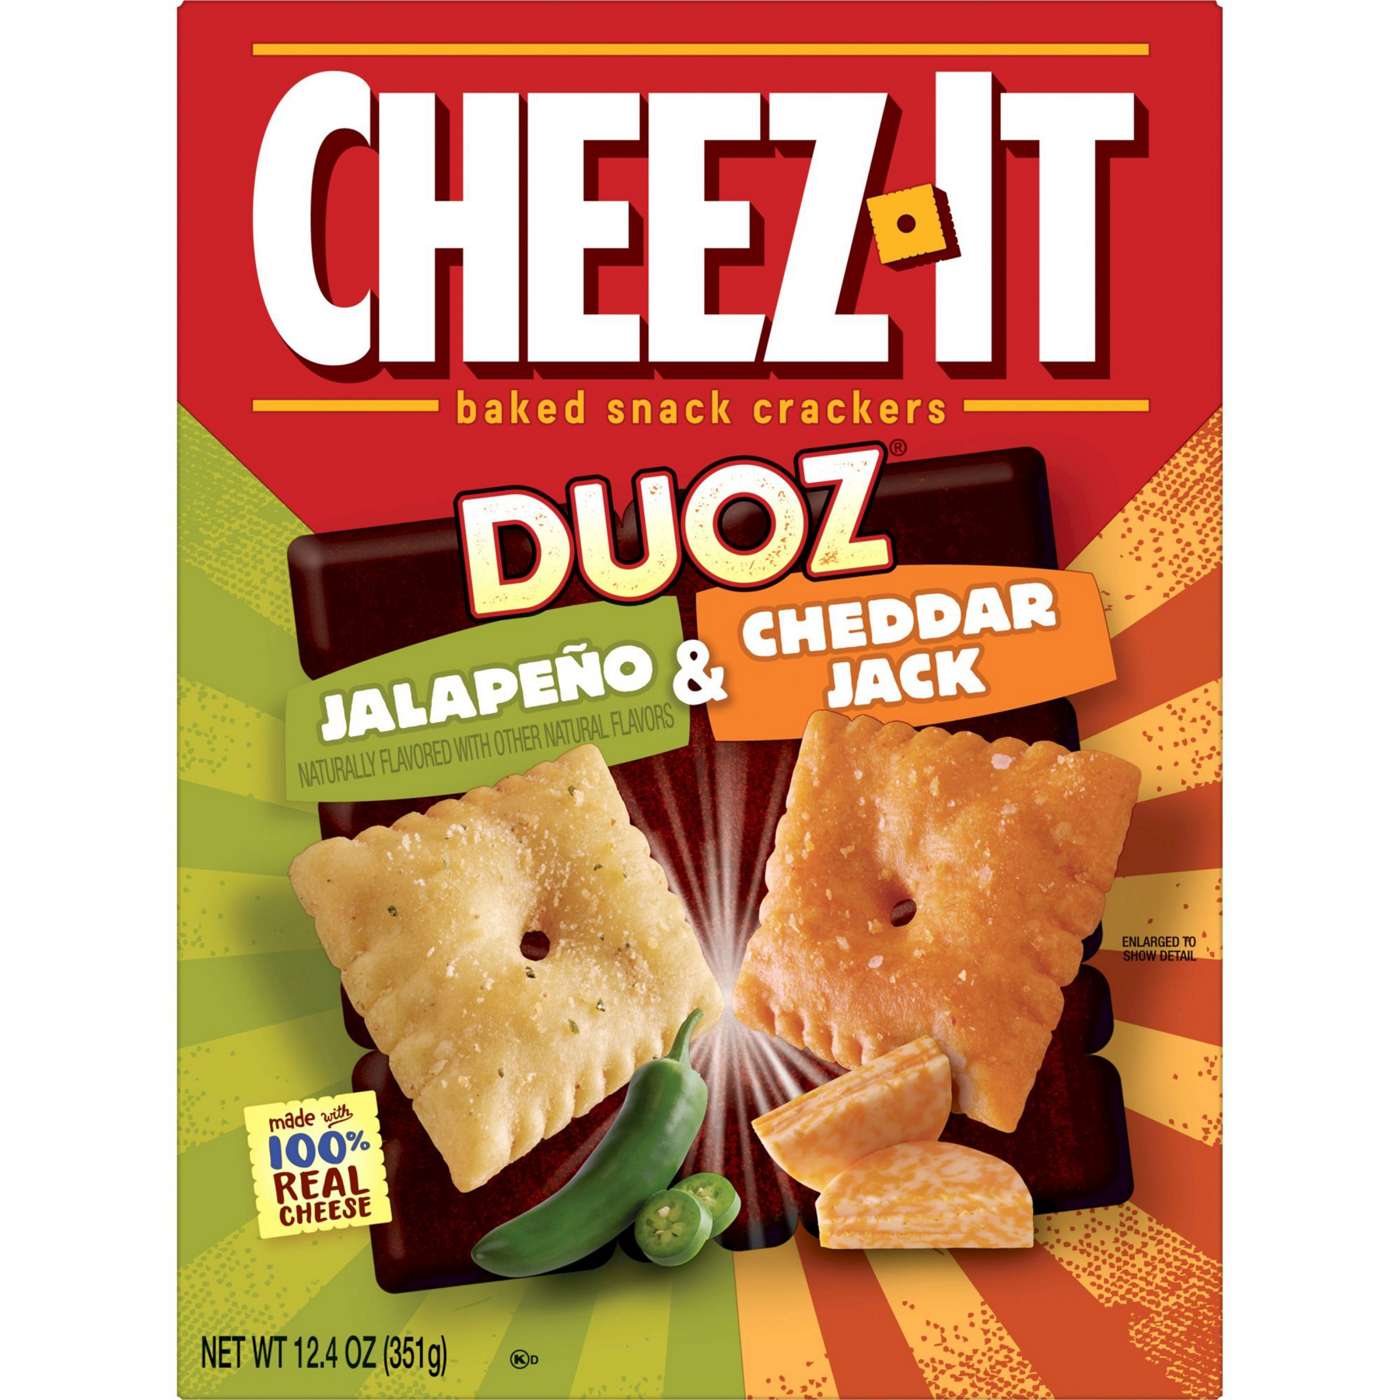 Cheez-It DUOZ Jalapeno Cheddar Jack Crackers; image 1 of 5